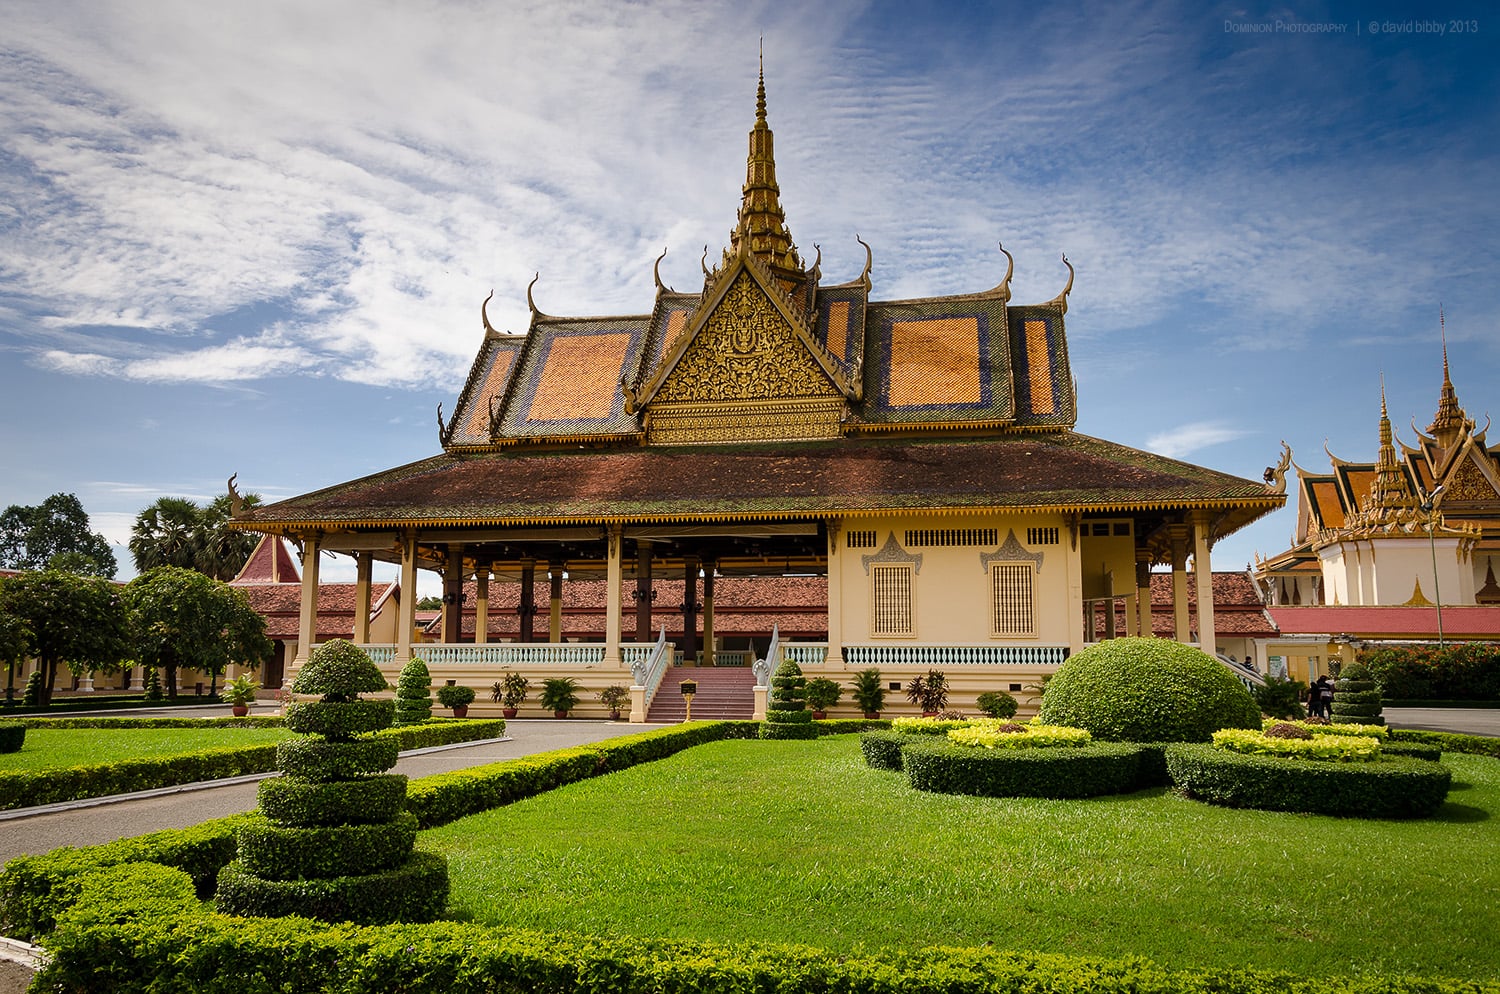   Phochani Pavilion  - Royal Palace complex, Phnom Penh, Cambodia. 